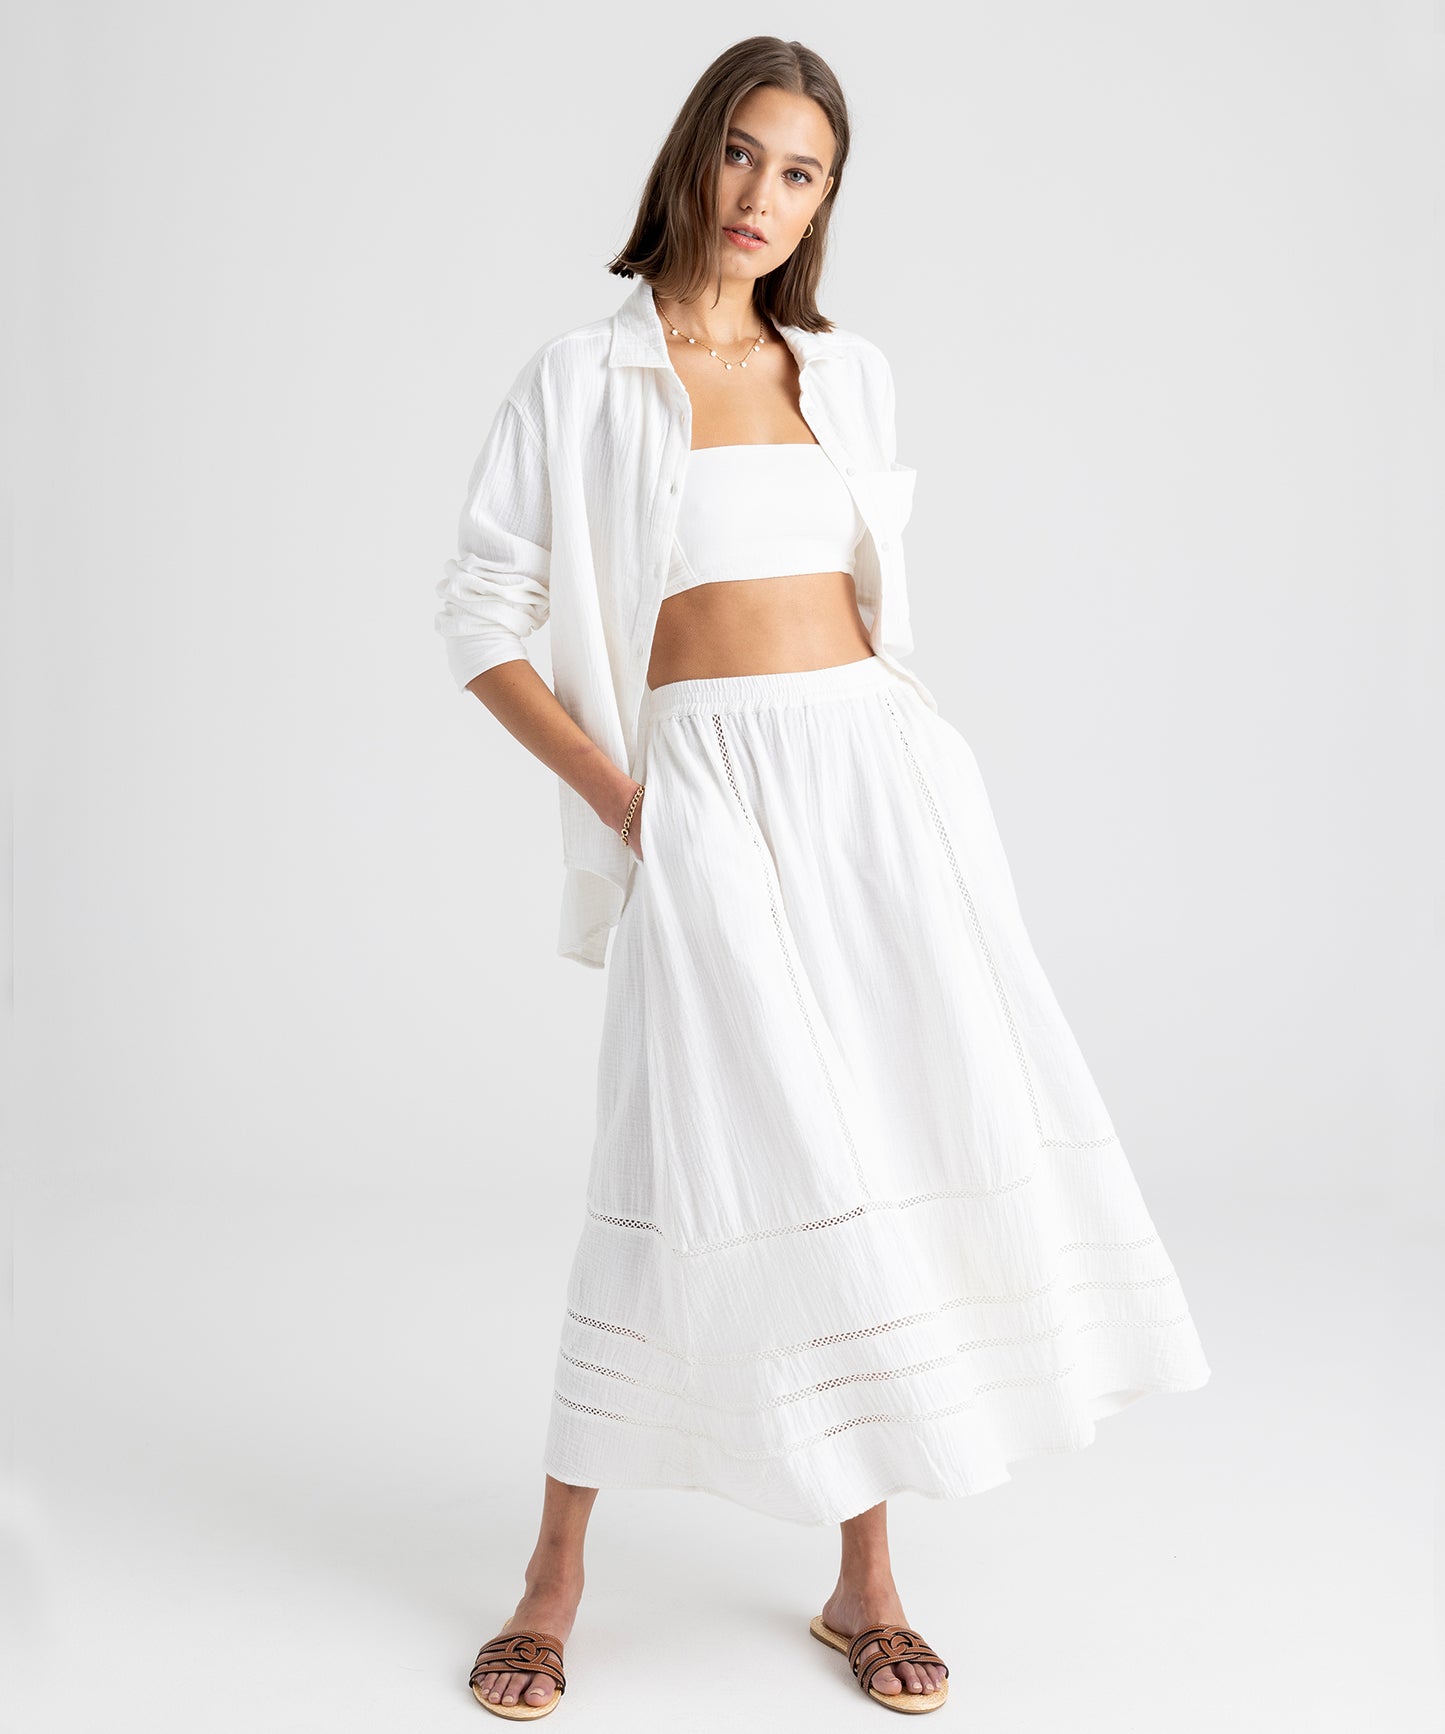 Supersoft Gauze Tova Skirt in color White on model